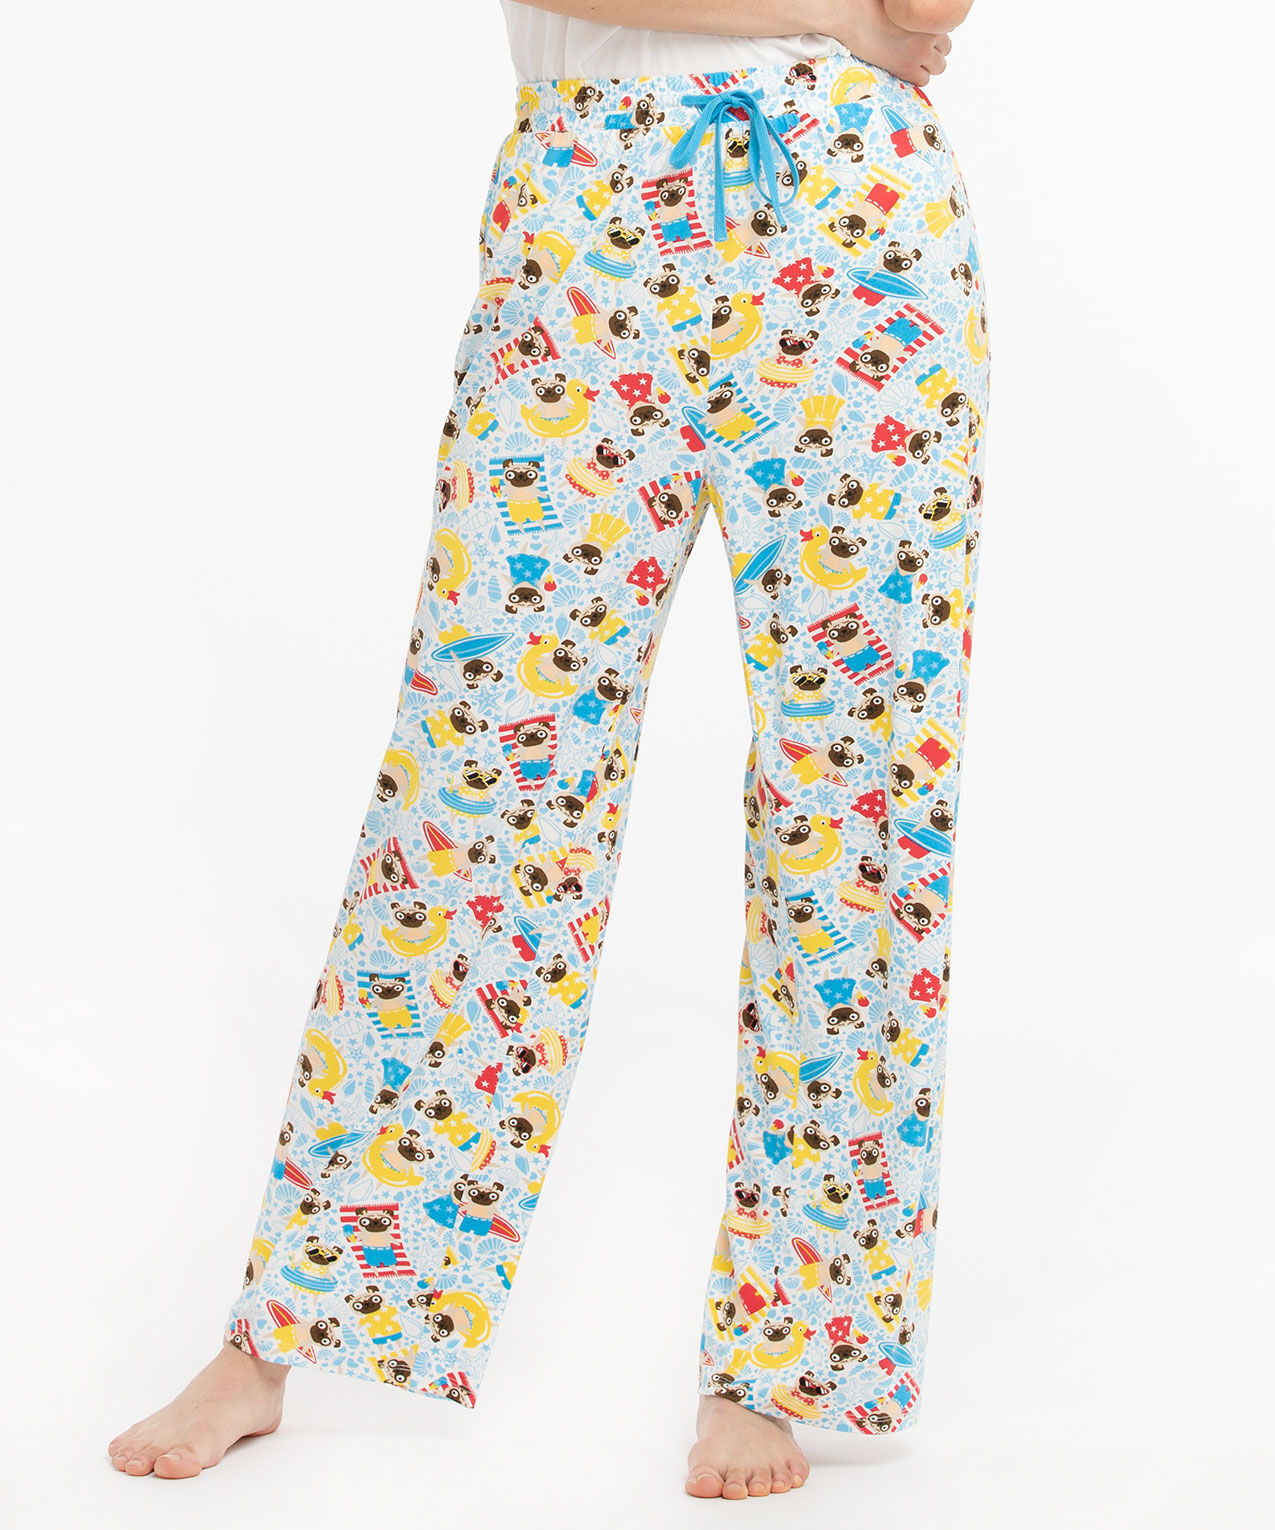 Jaclyn Smith Dog Pajama Pants for Women | Mercari